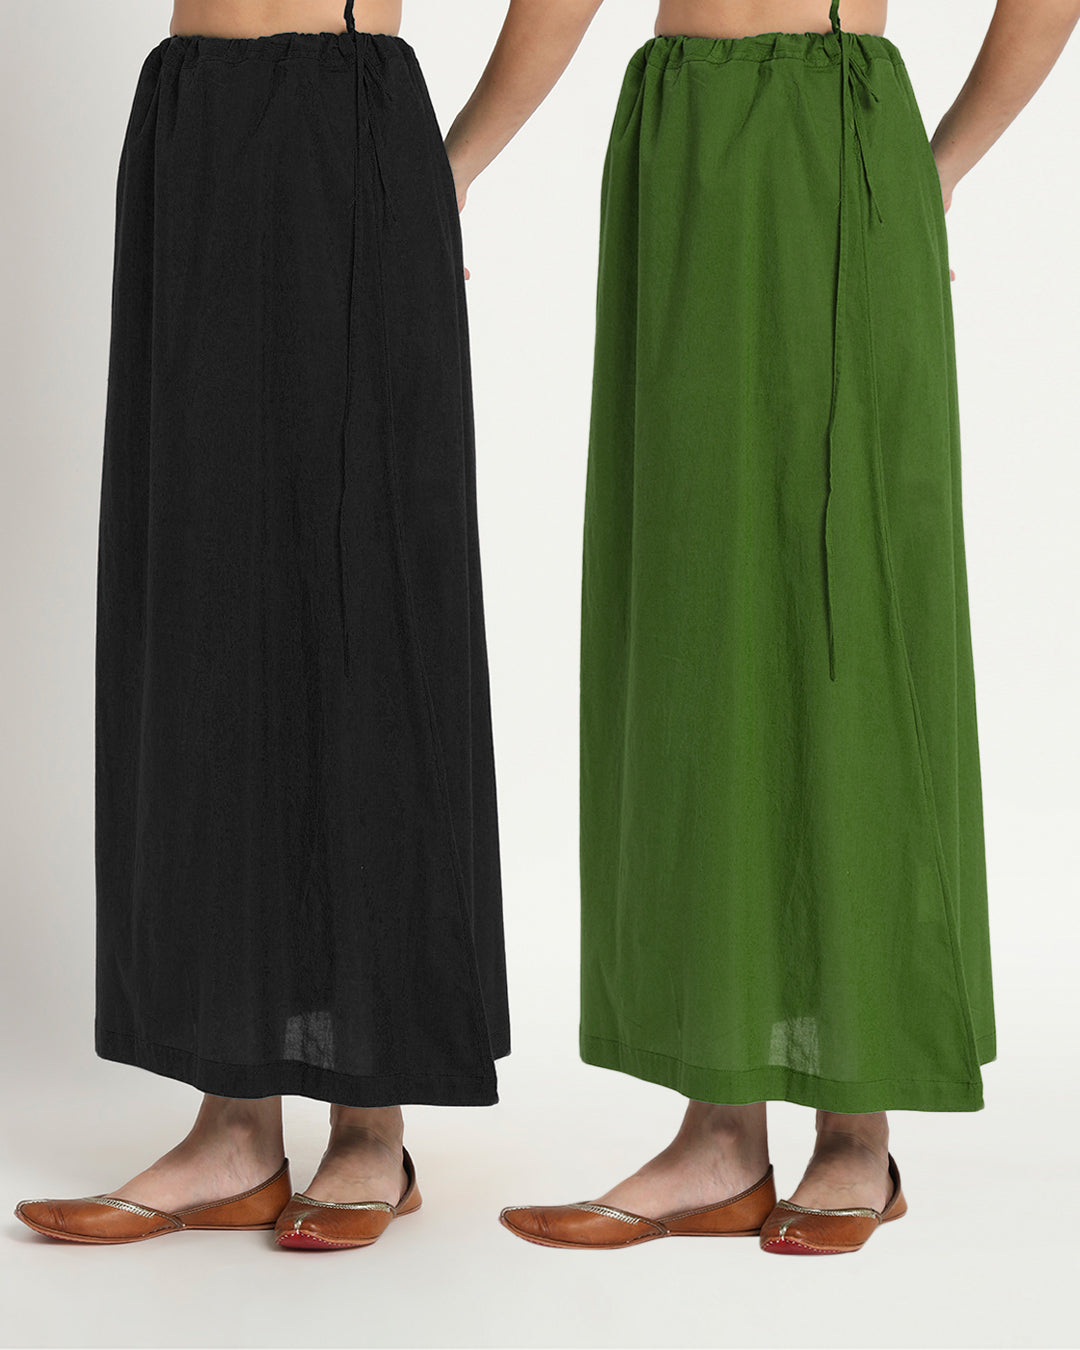 Combo: Black & Greening Spring Peekaboo Petticoat- Set of 2